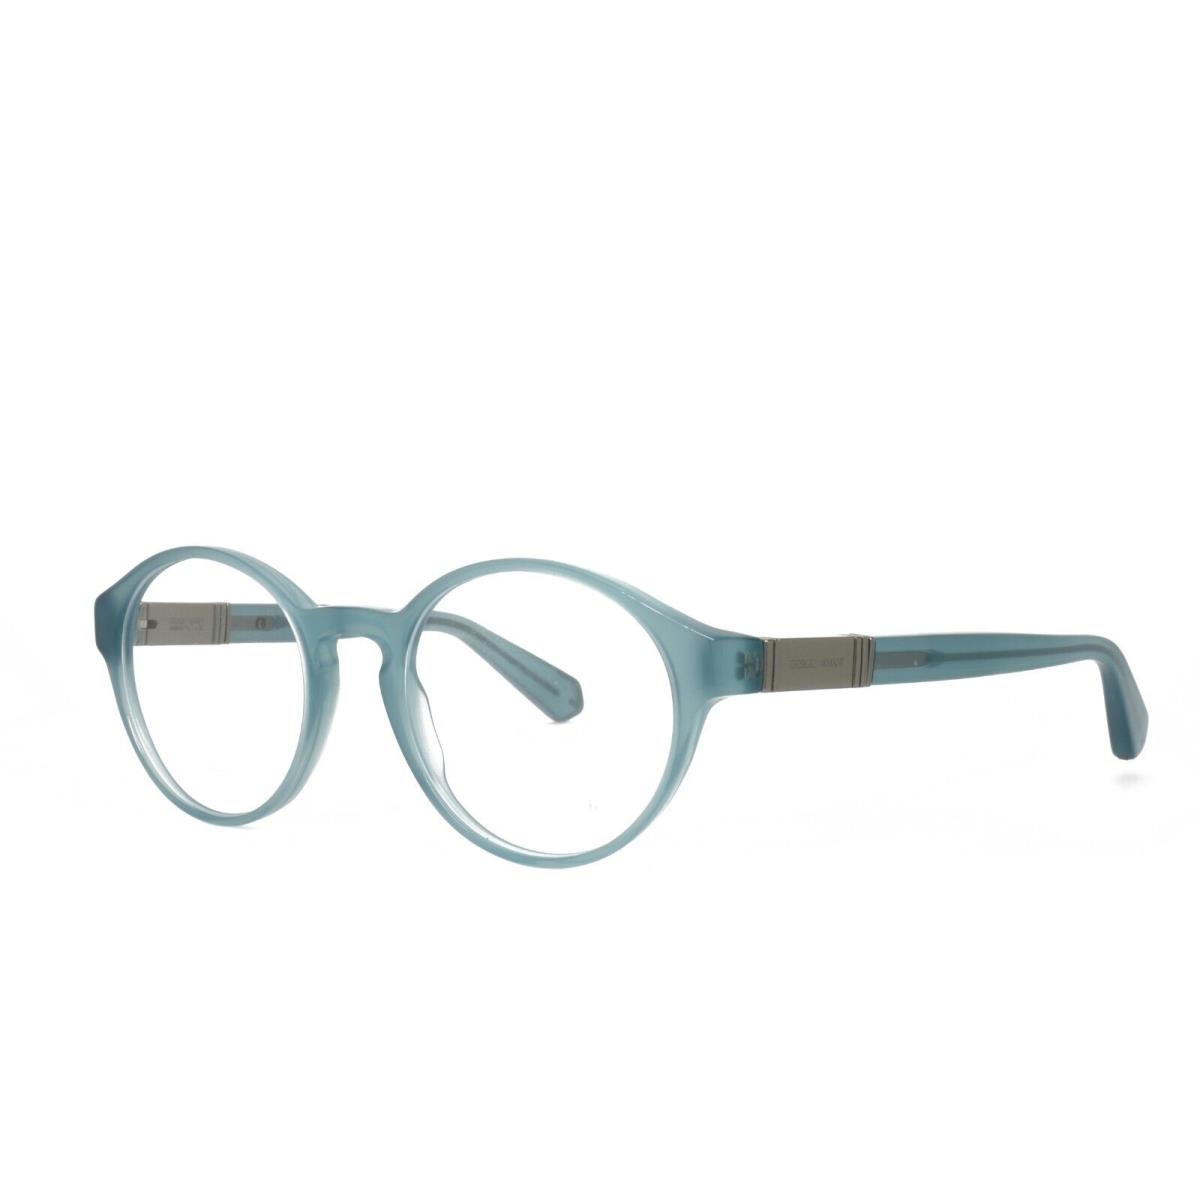 Giorgio Armani 7002 5034 50-20-140 Blue Eyeglasses Frames